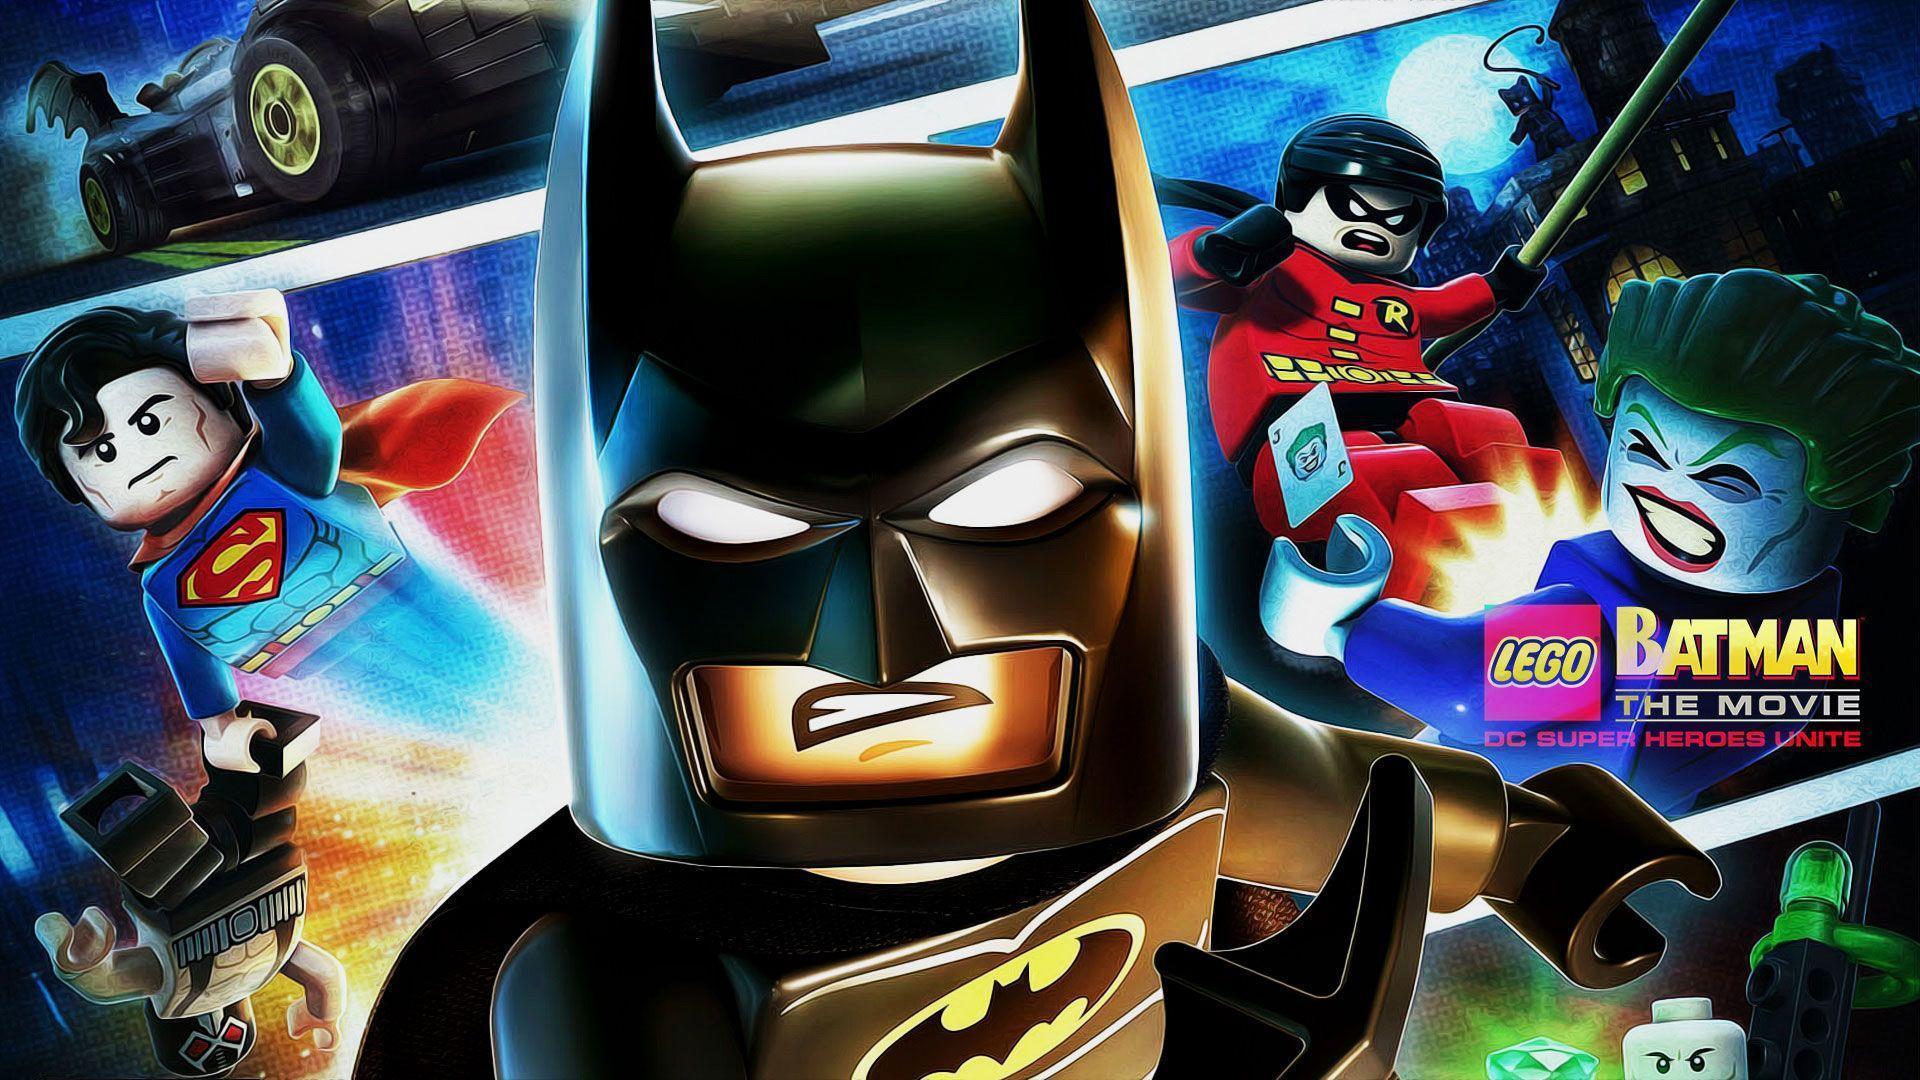 The Lego Batman Movie wallpapers 2K film poster Wallpaper Free HD